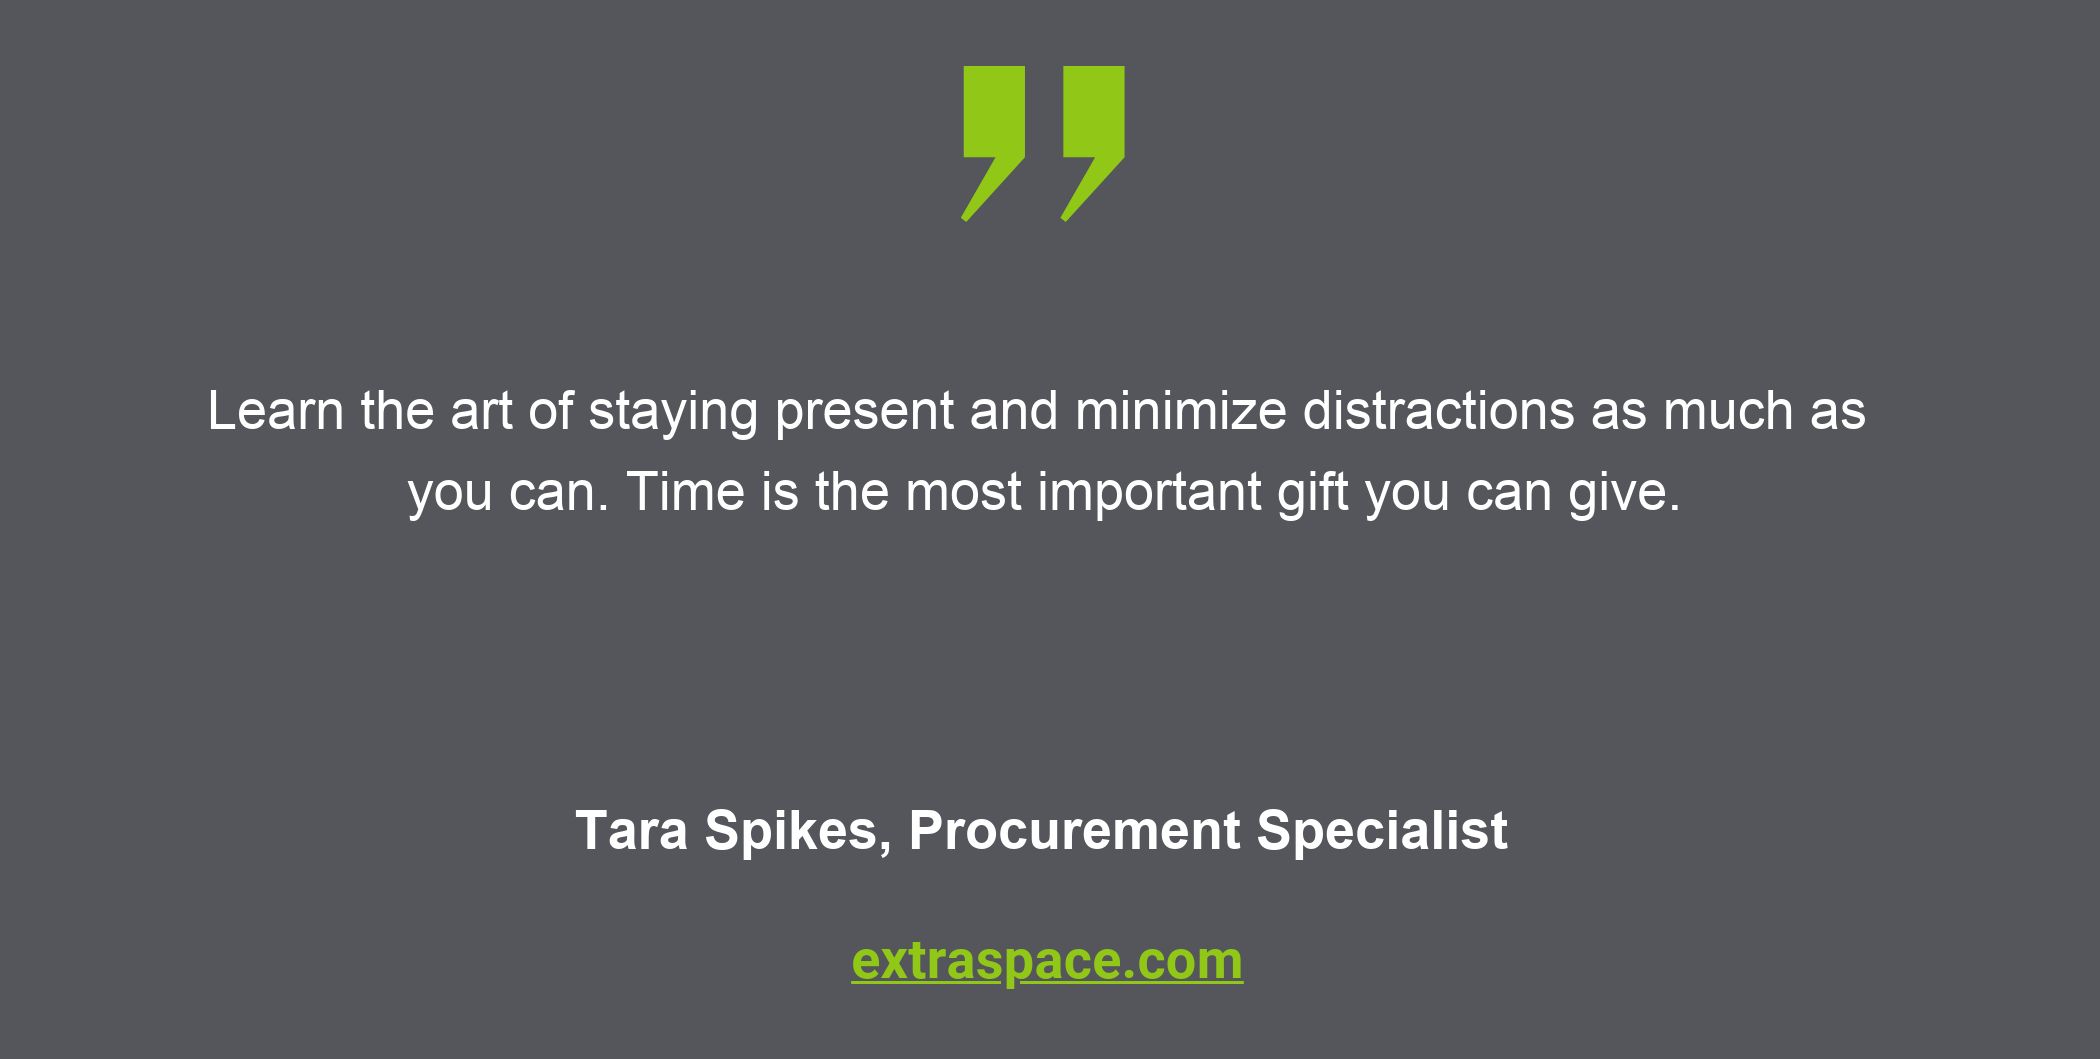 Tara Spikes, Procurement Specialist - 2022 Resolutions